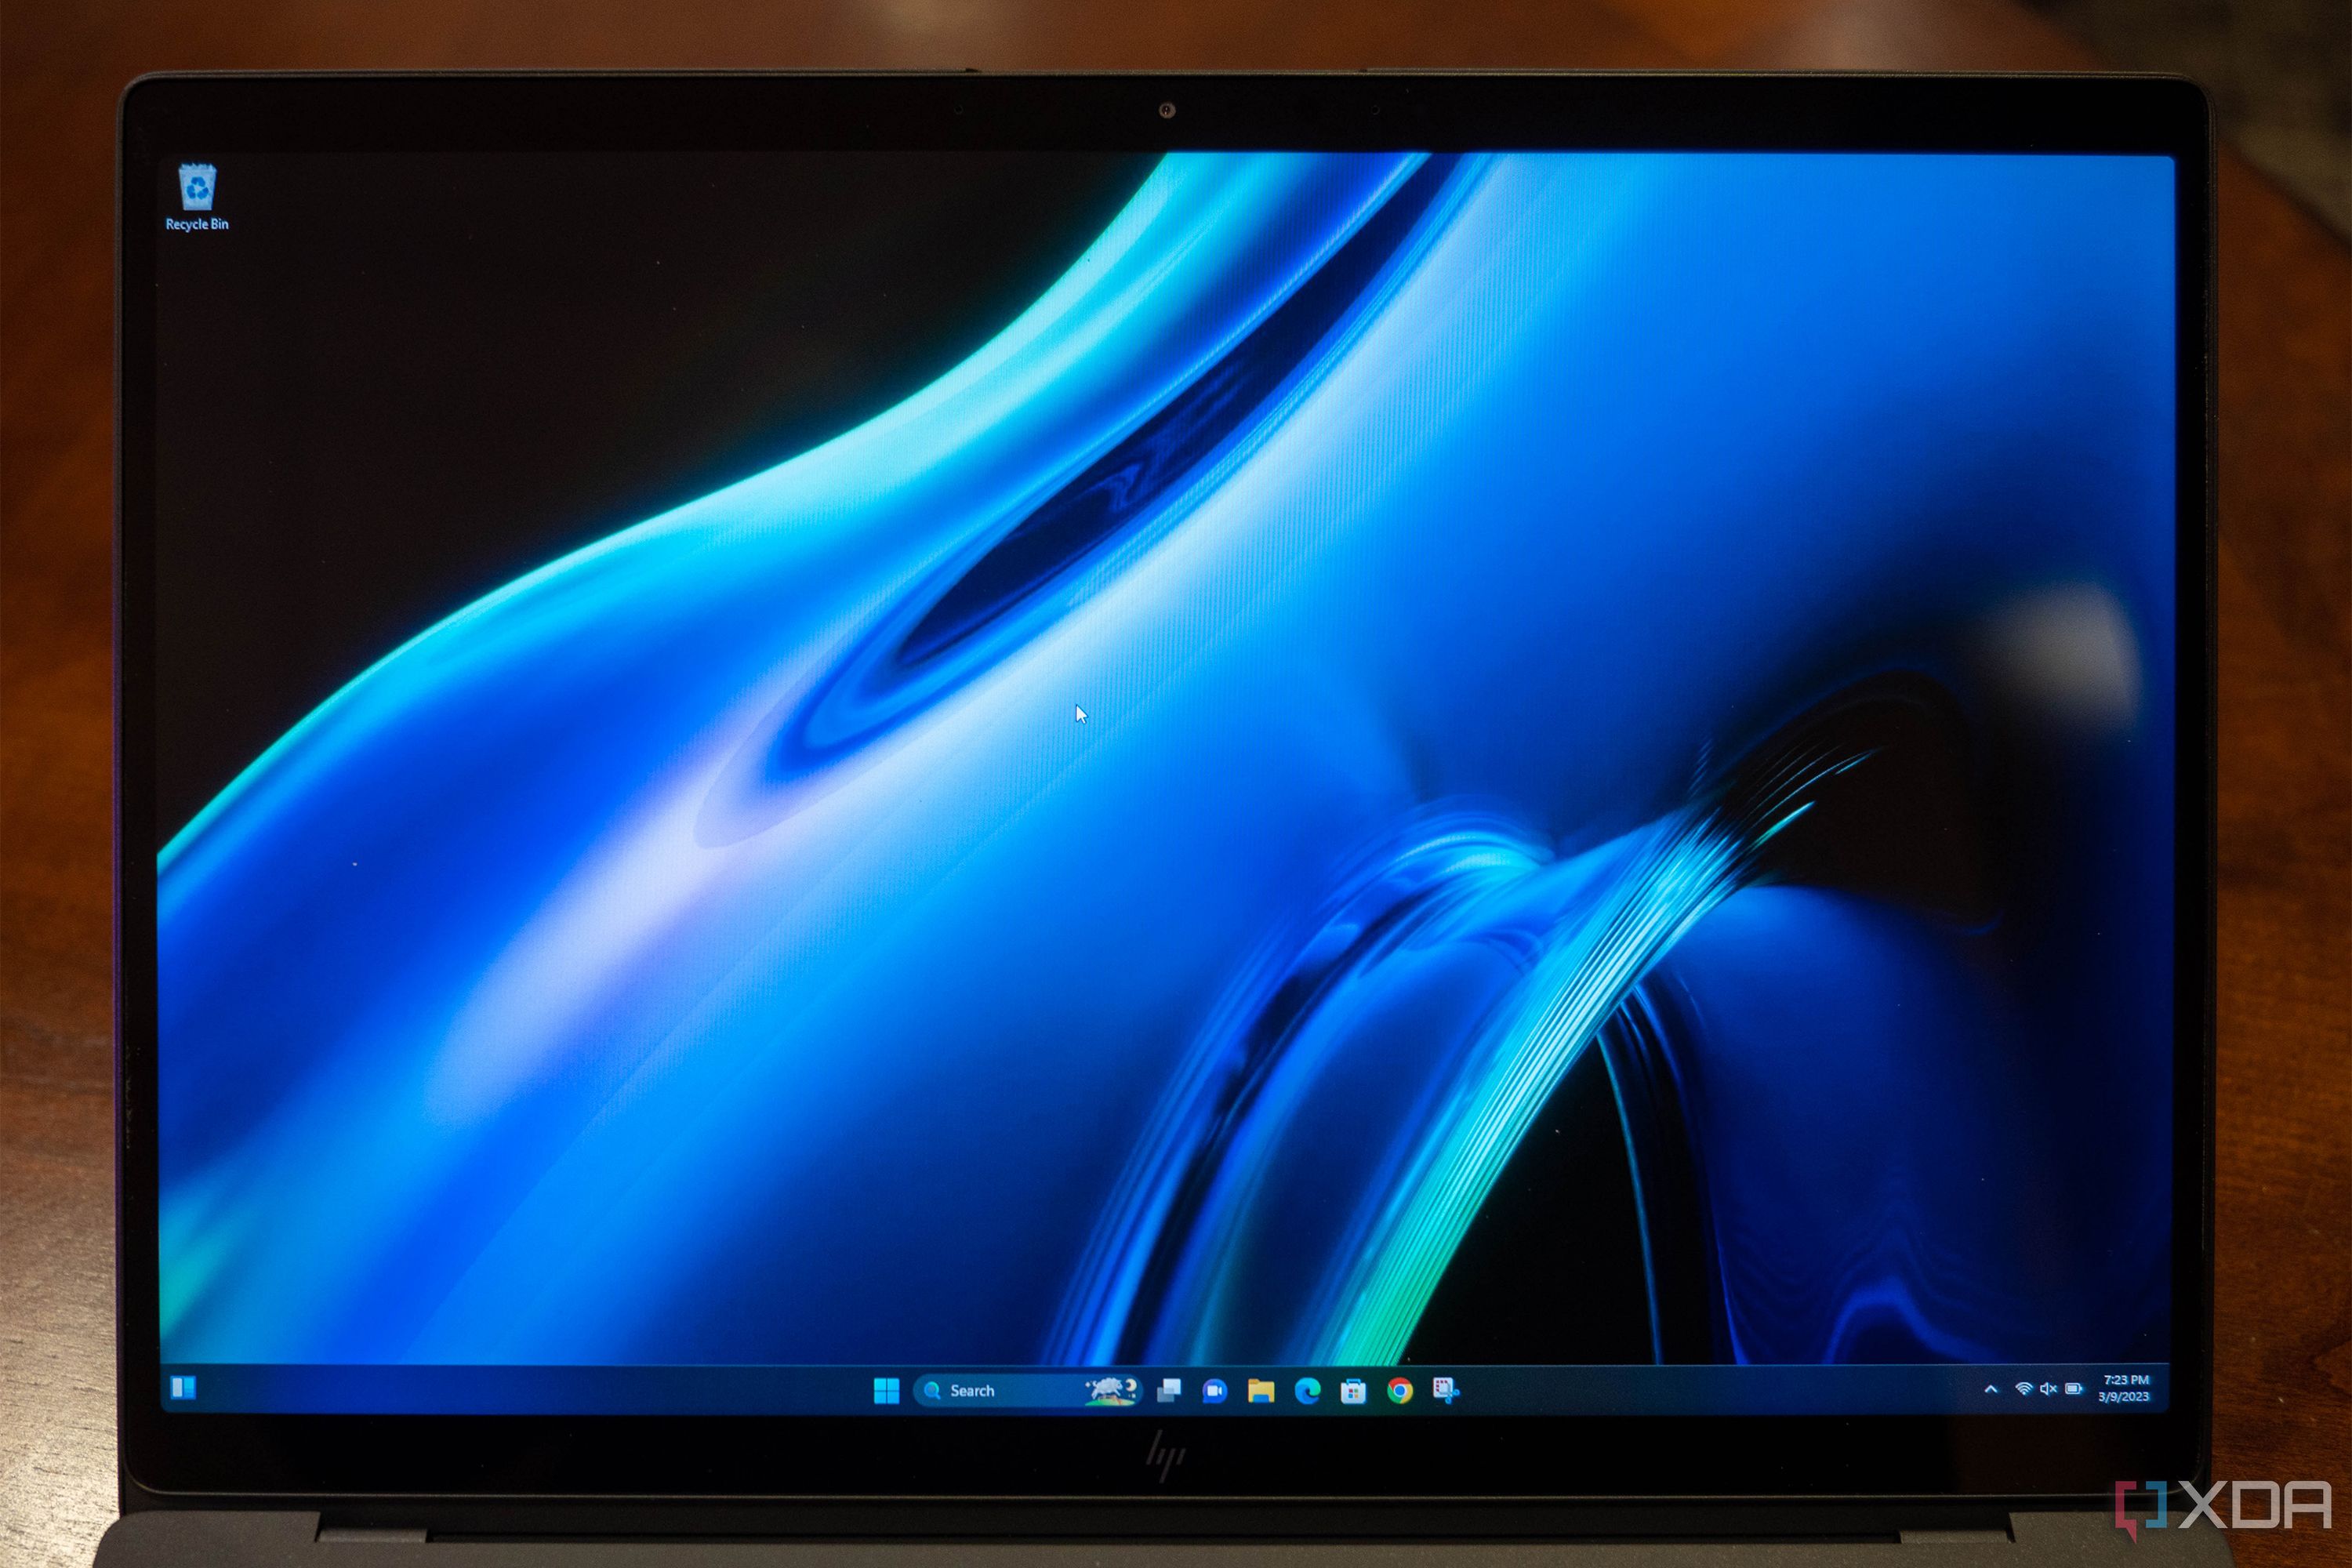 Close up view of laptop display running Windows 11